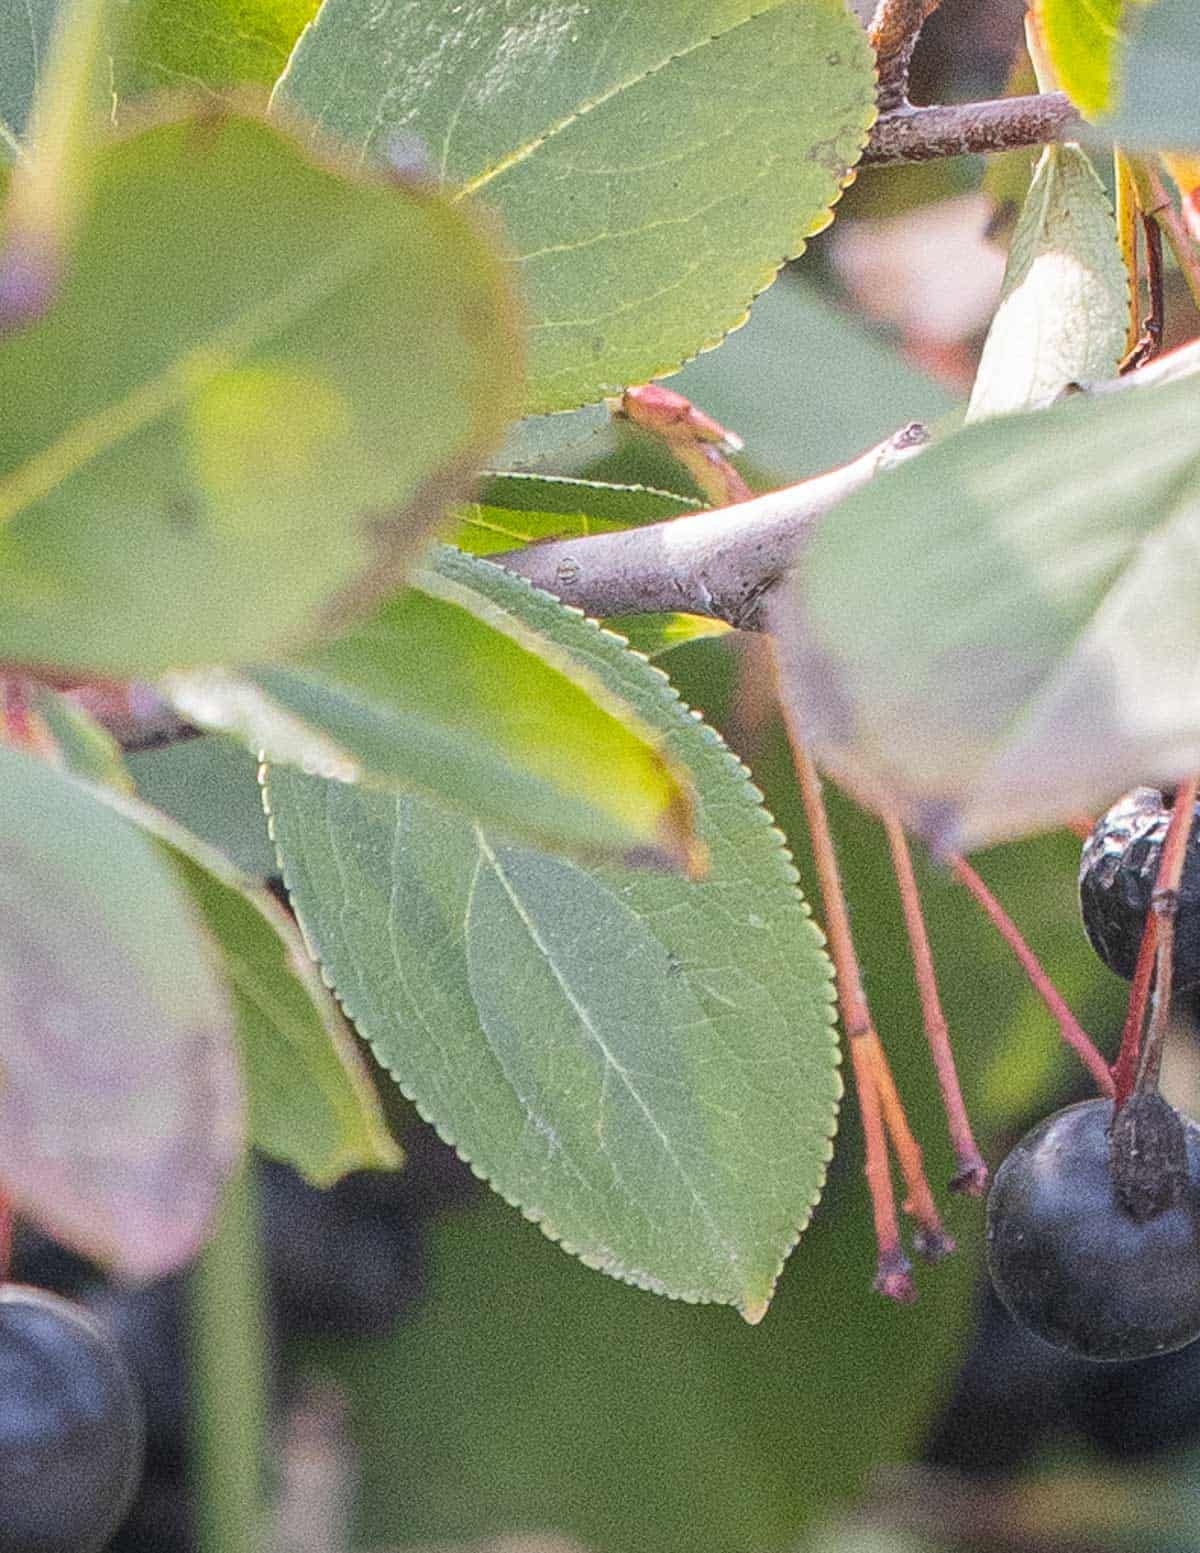 Close up image of chokeberry leaves (Aronia melanocarpa) showing serrated edges.